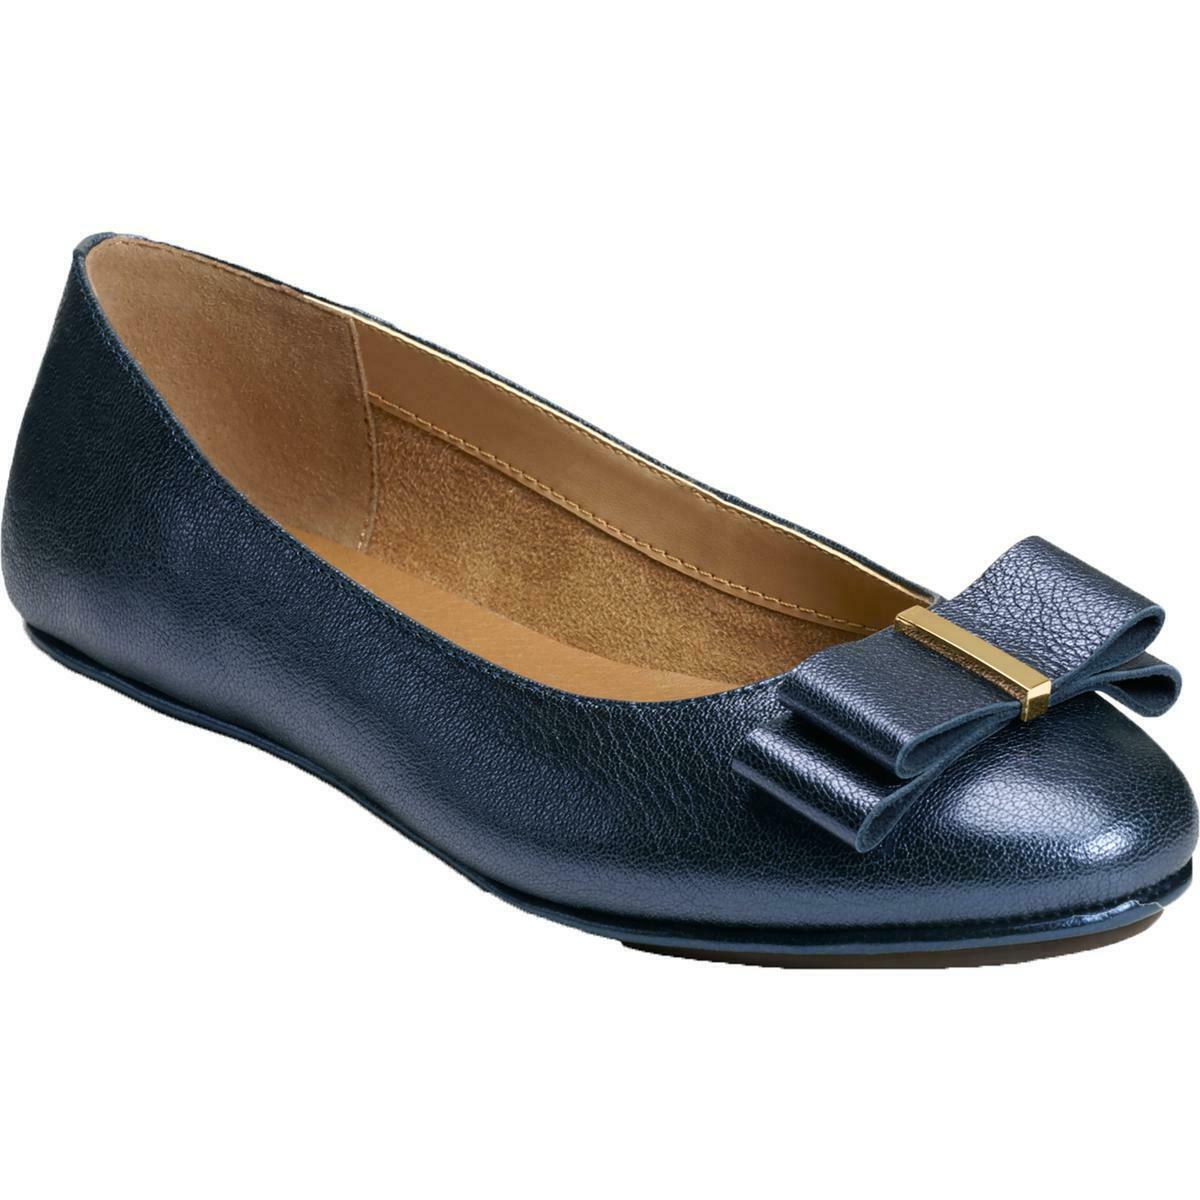 Aerosoles Womens Conversation Navy Ballet Flats Shoes 9.5 Medium (B,M) BHFO 2248